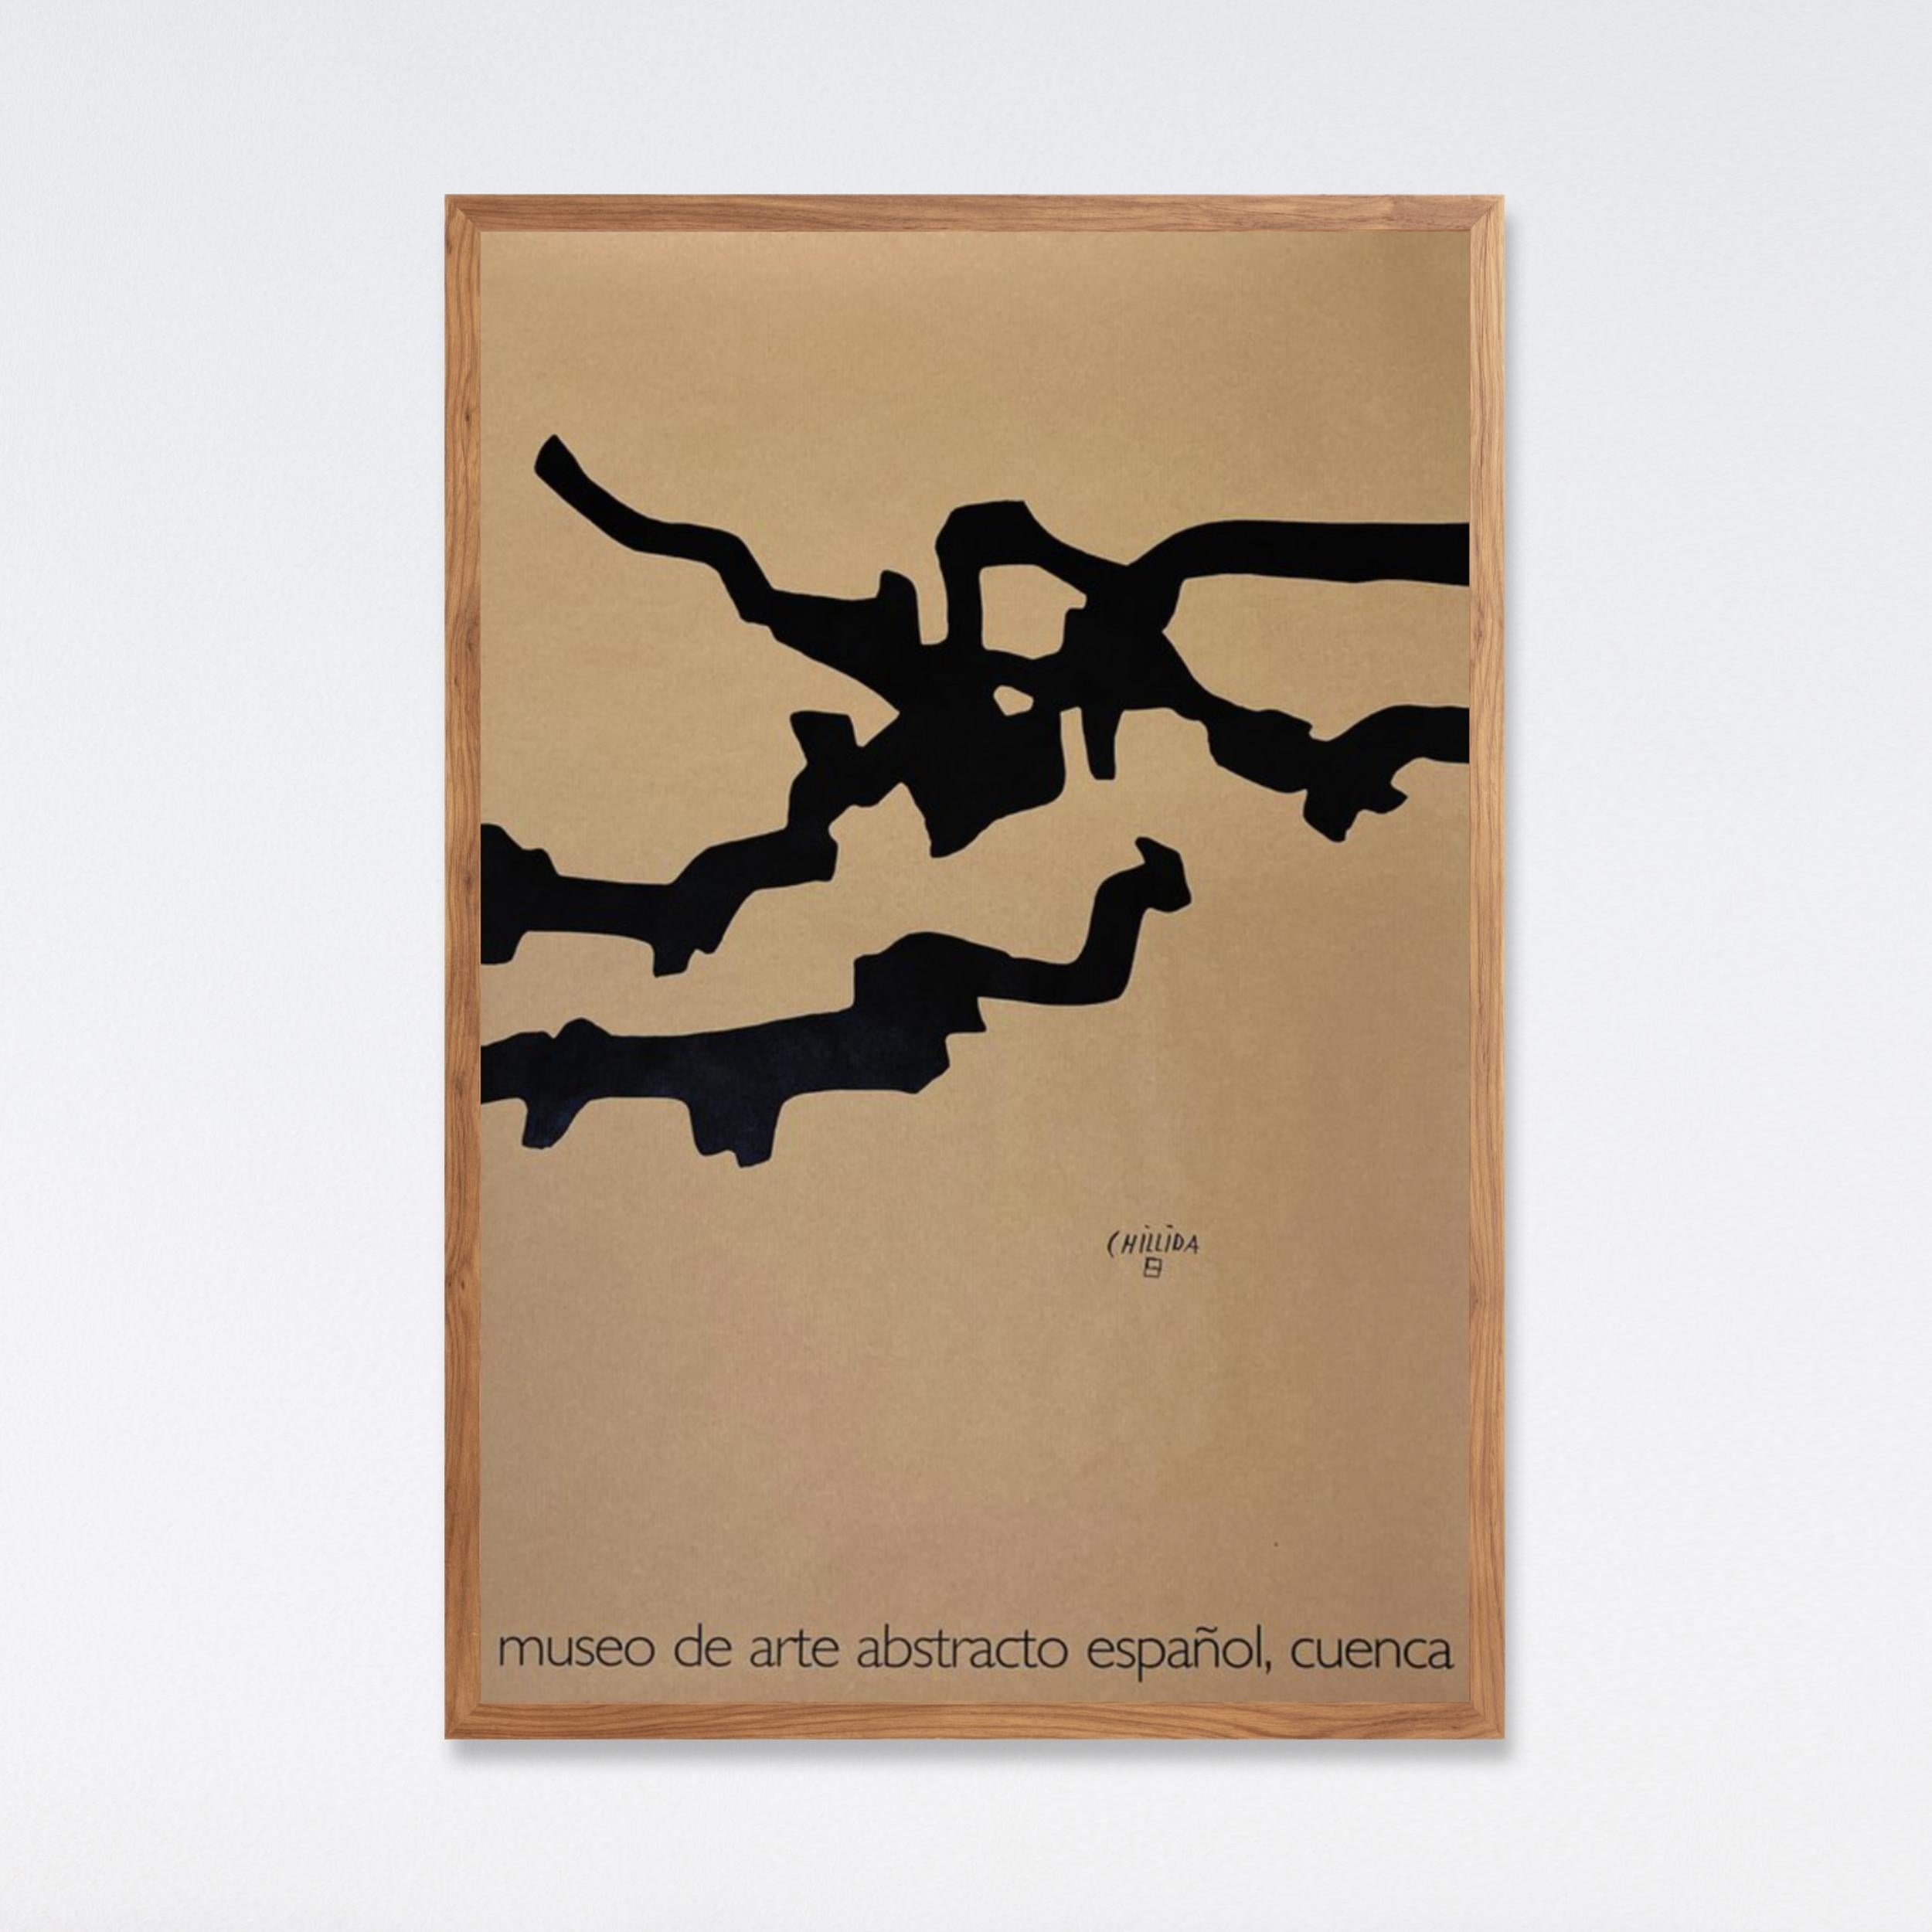 Eduardo Chillida, Mármol y plomo (Marble and lead), rare 2004 lithograph For Sale 3